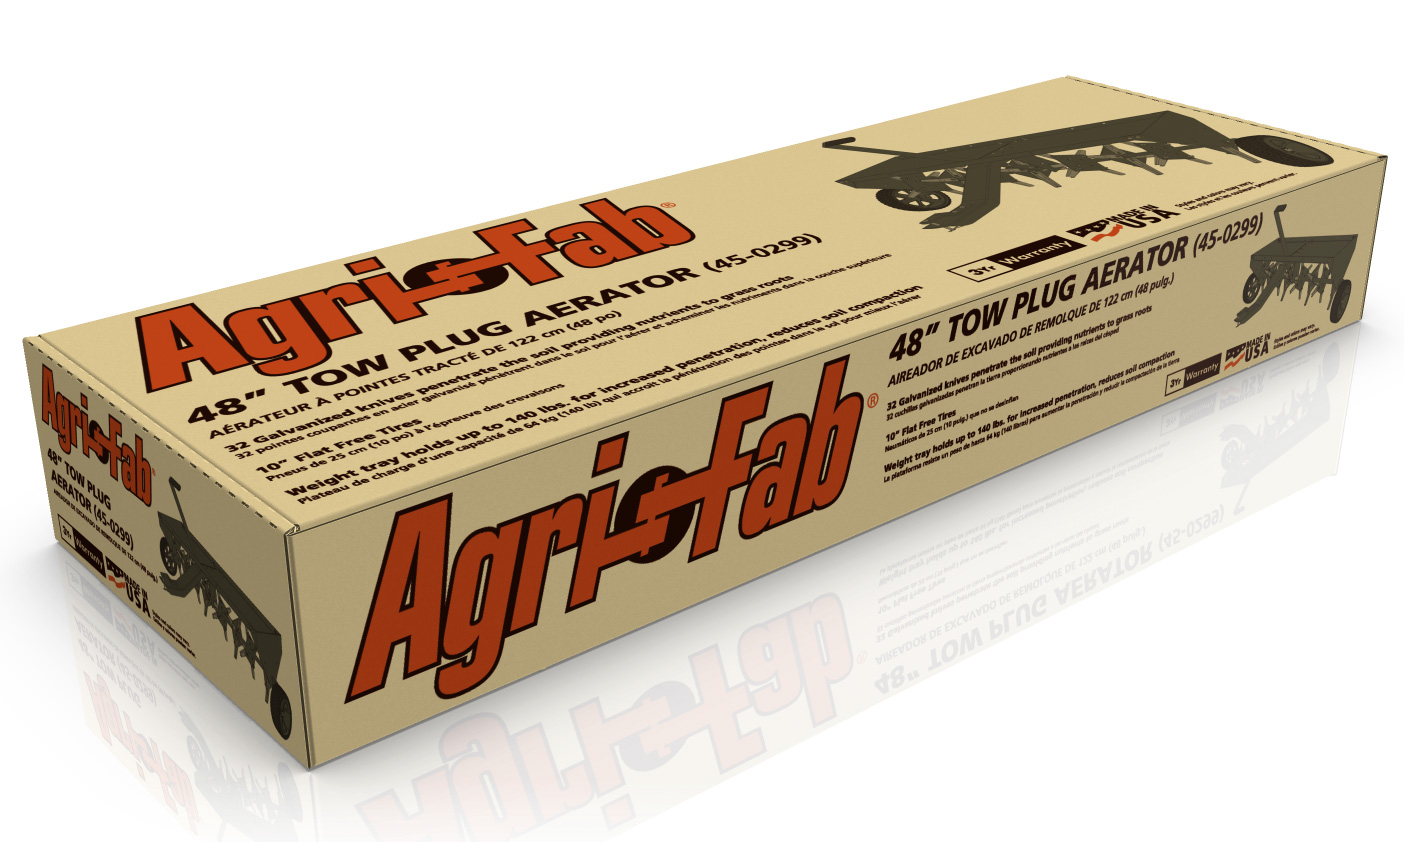 Agri-Fab, Inc. 48" Plug Aerator Tow-Behind Lawn Groomer - Model # 45-0299 - image 5 of 10